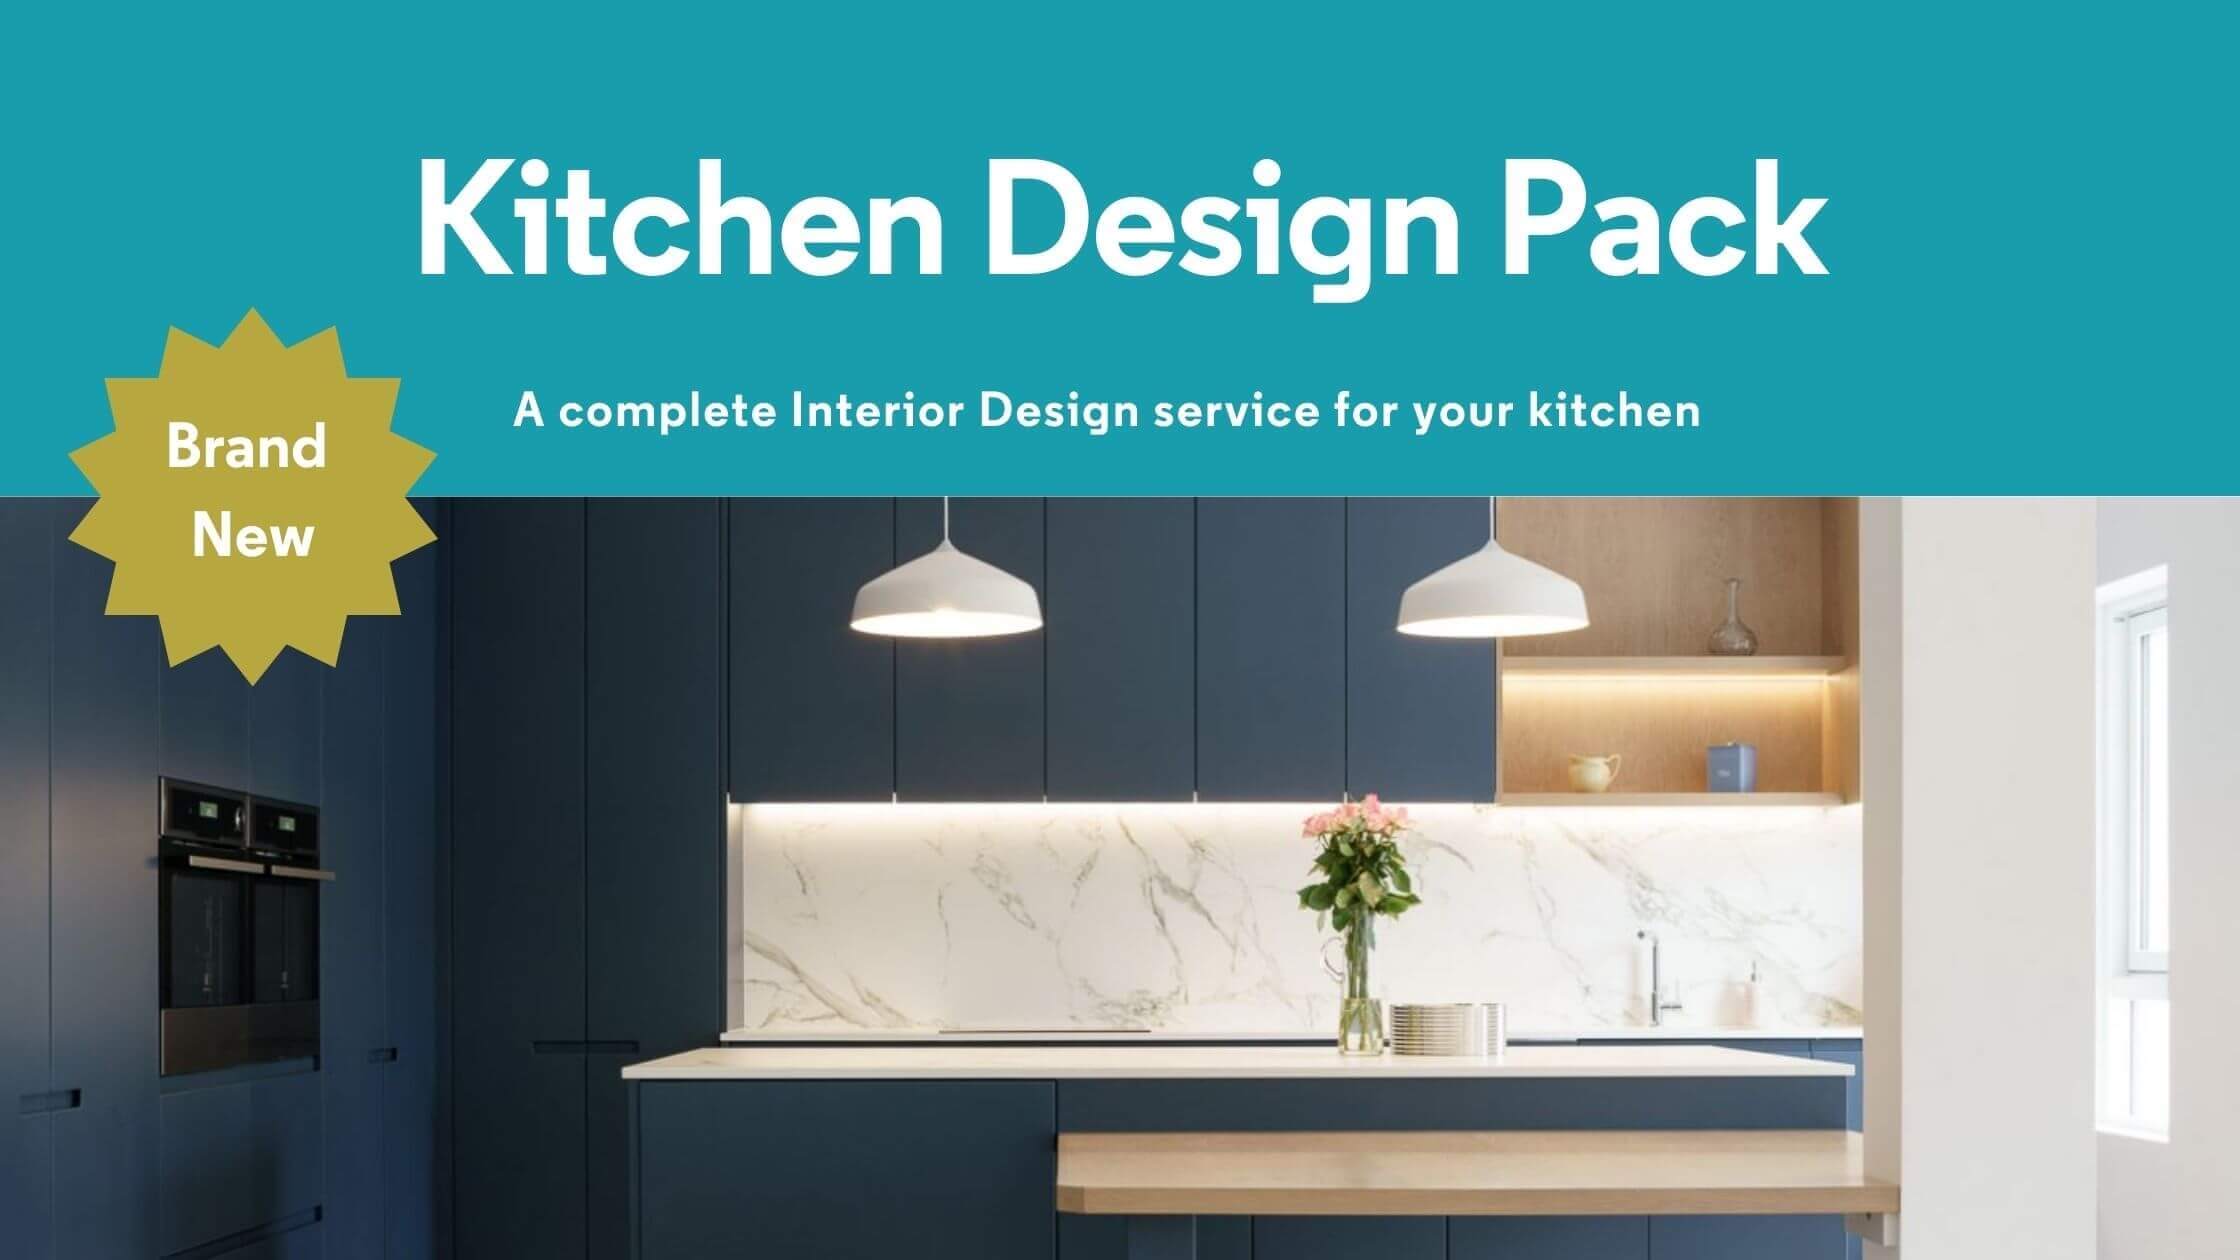 Brand New Kitchen Design Pack   Optimise Home   Architects ...